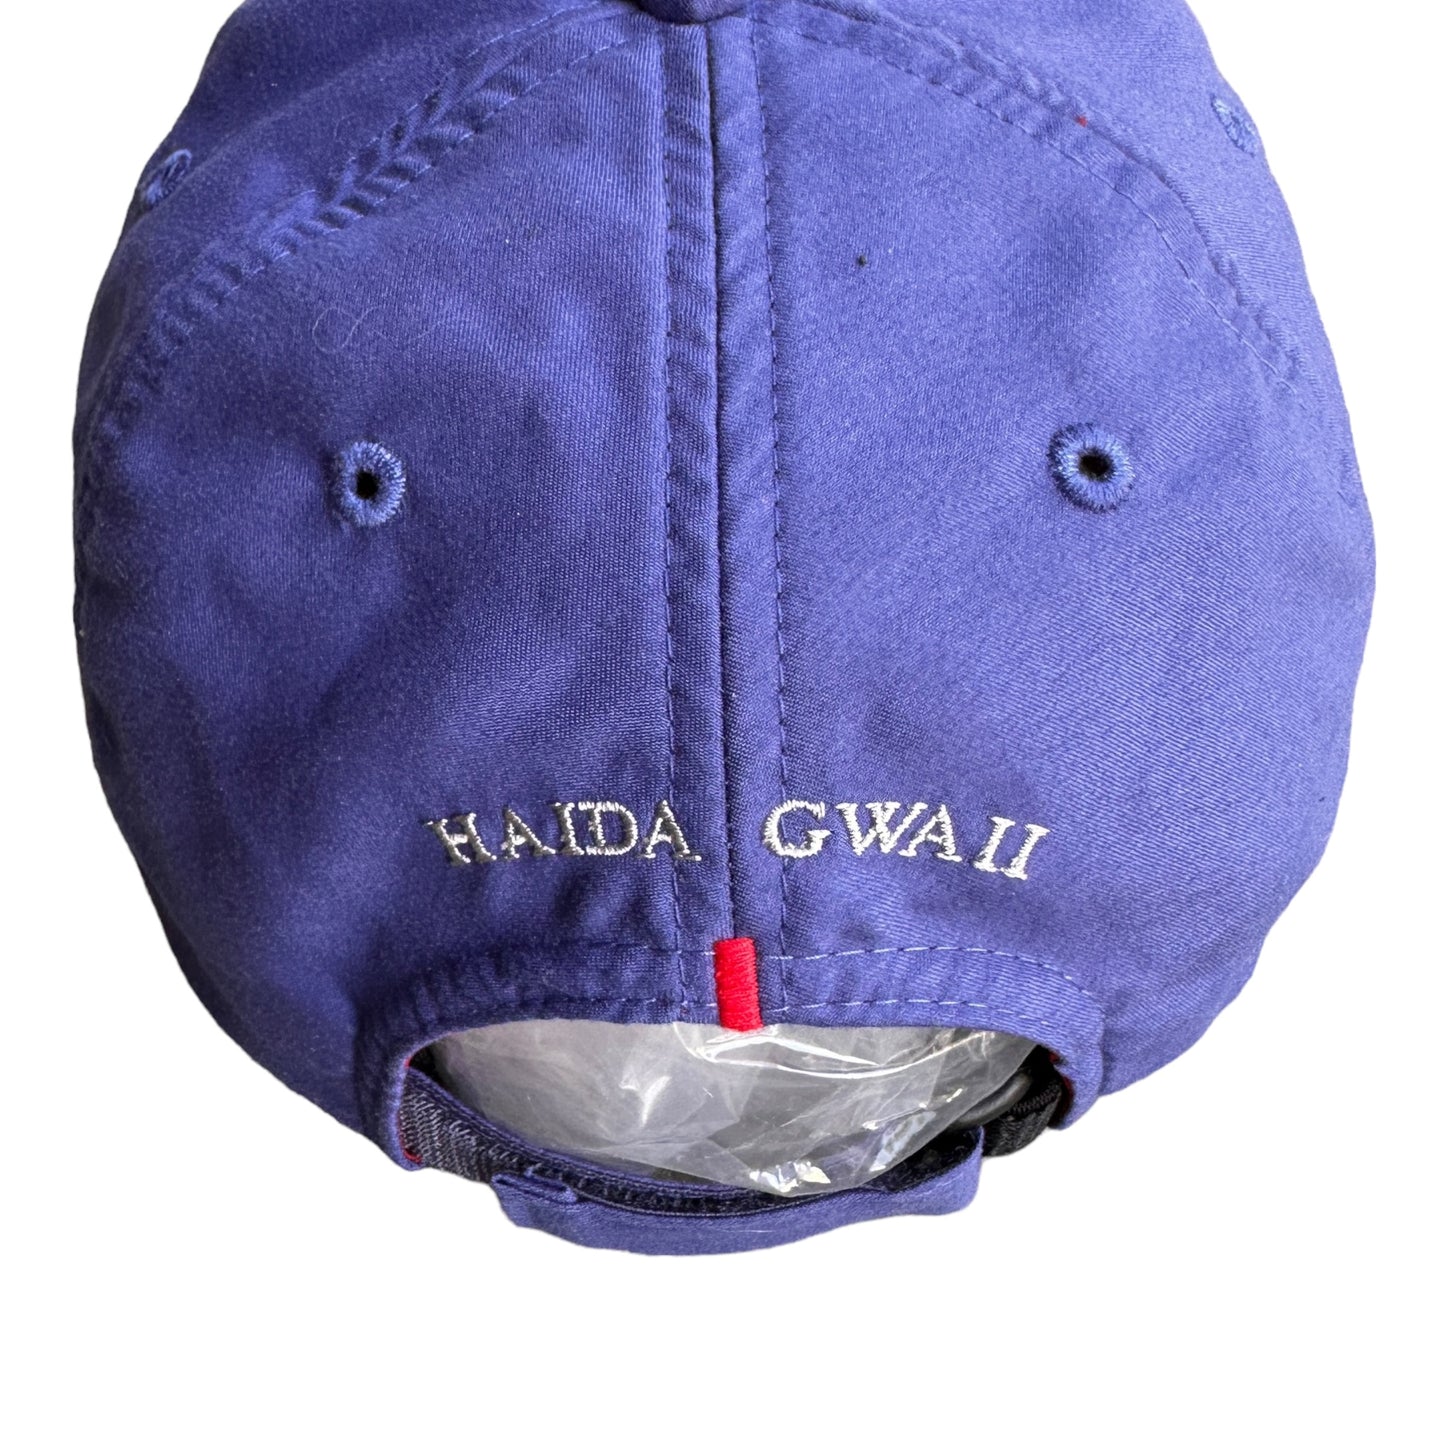 Haida gwaii big bill langra fishing hat